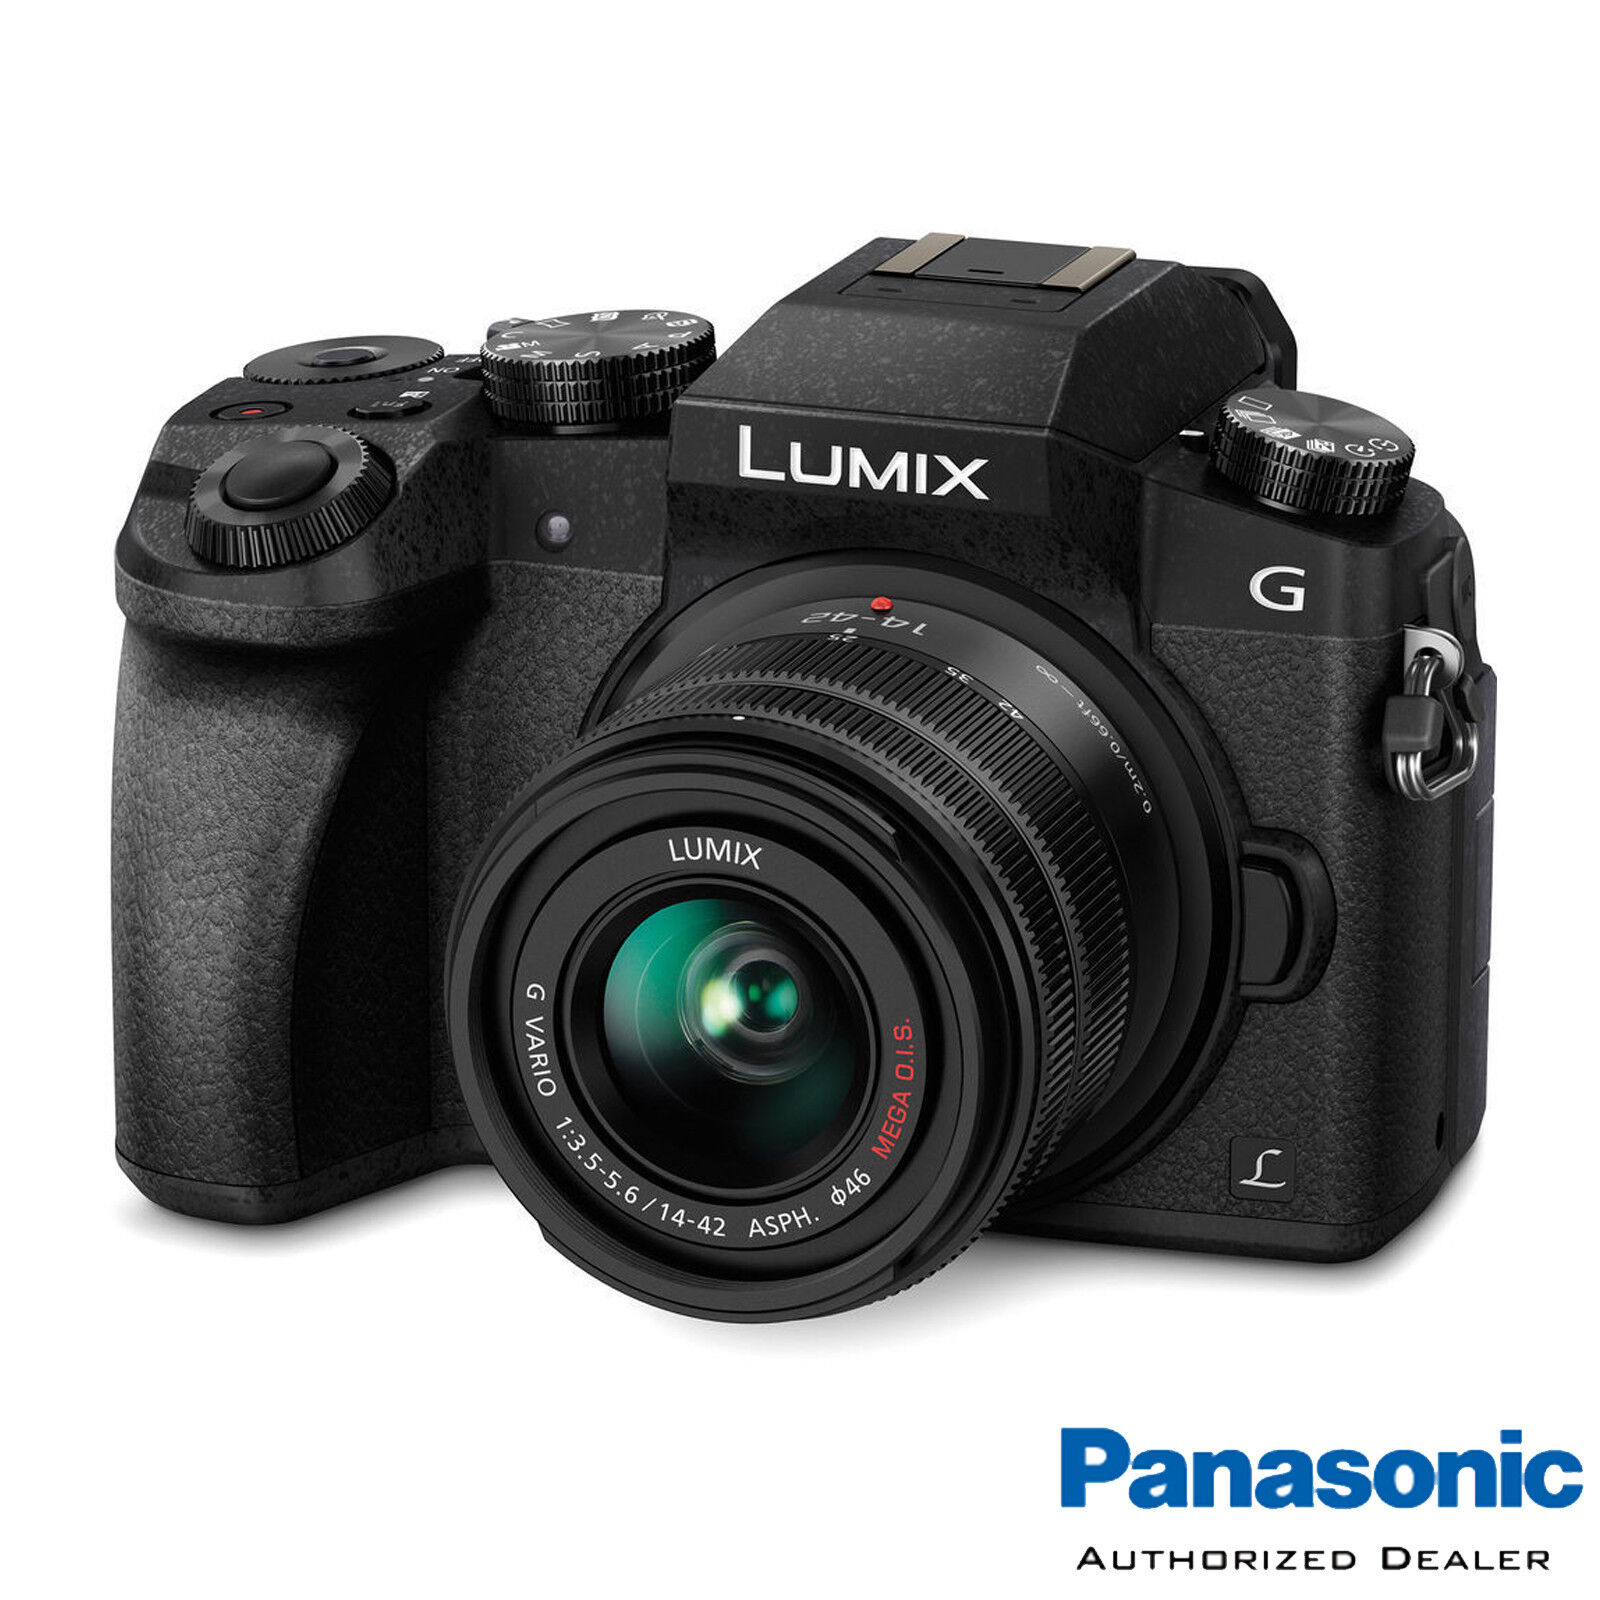 Panasonic Lumix DMC-G7 16 Megapixel Mirrorless Camera with Lens, 0.55", 1.65", Black - image 2 of 5